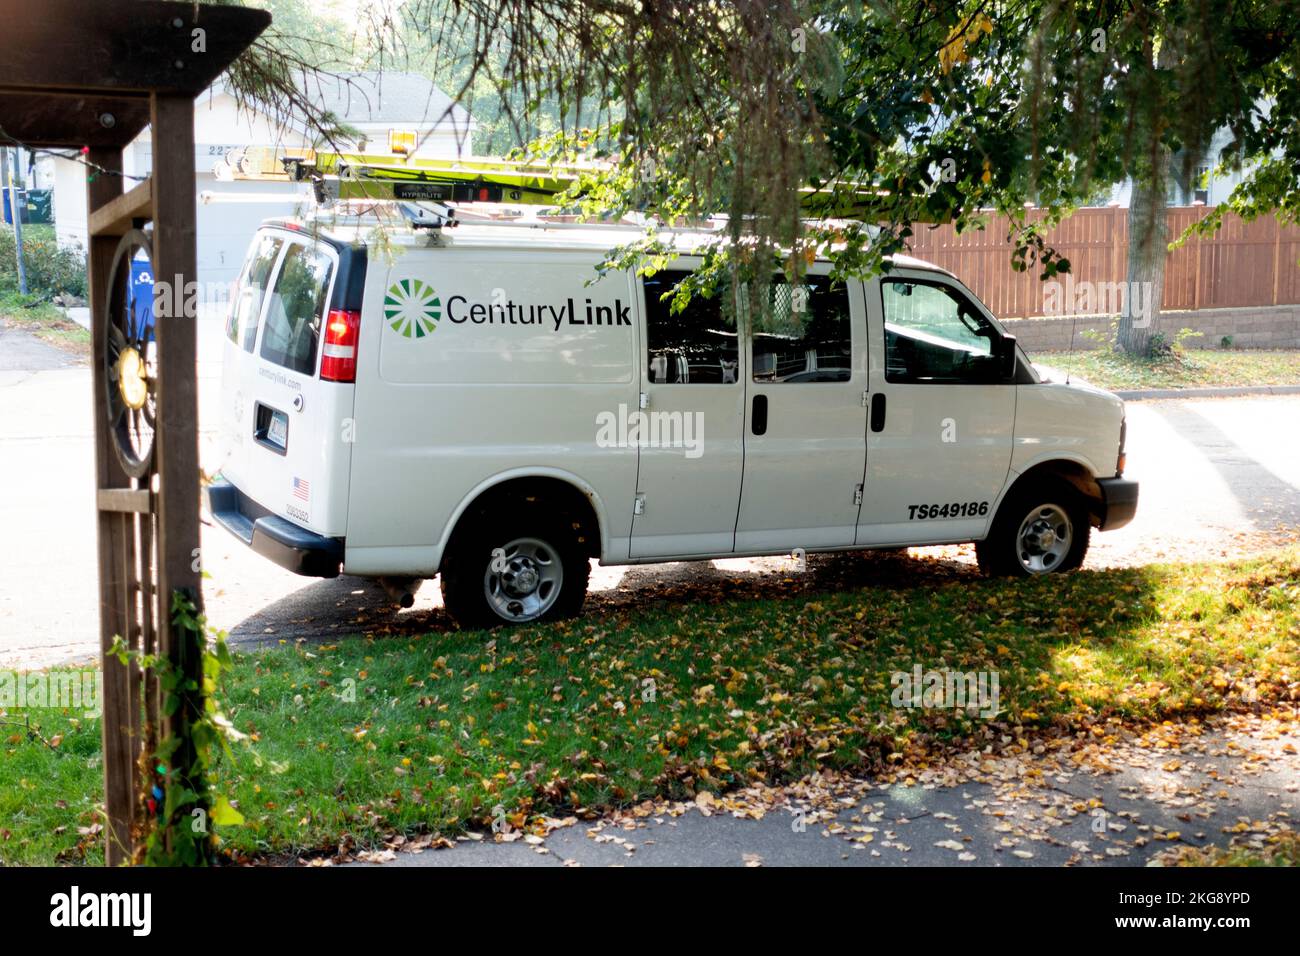 CenturyLink repair truck. They hook people up to the internet. St Paul Minnesota MN USA Stock Photo